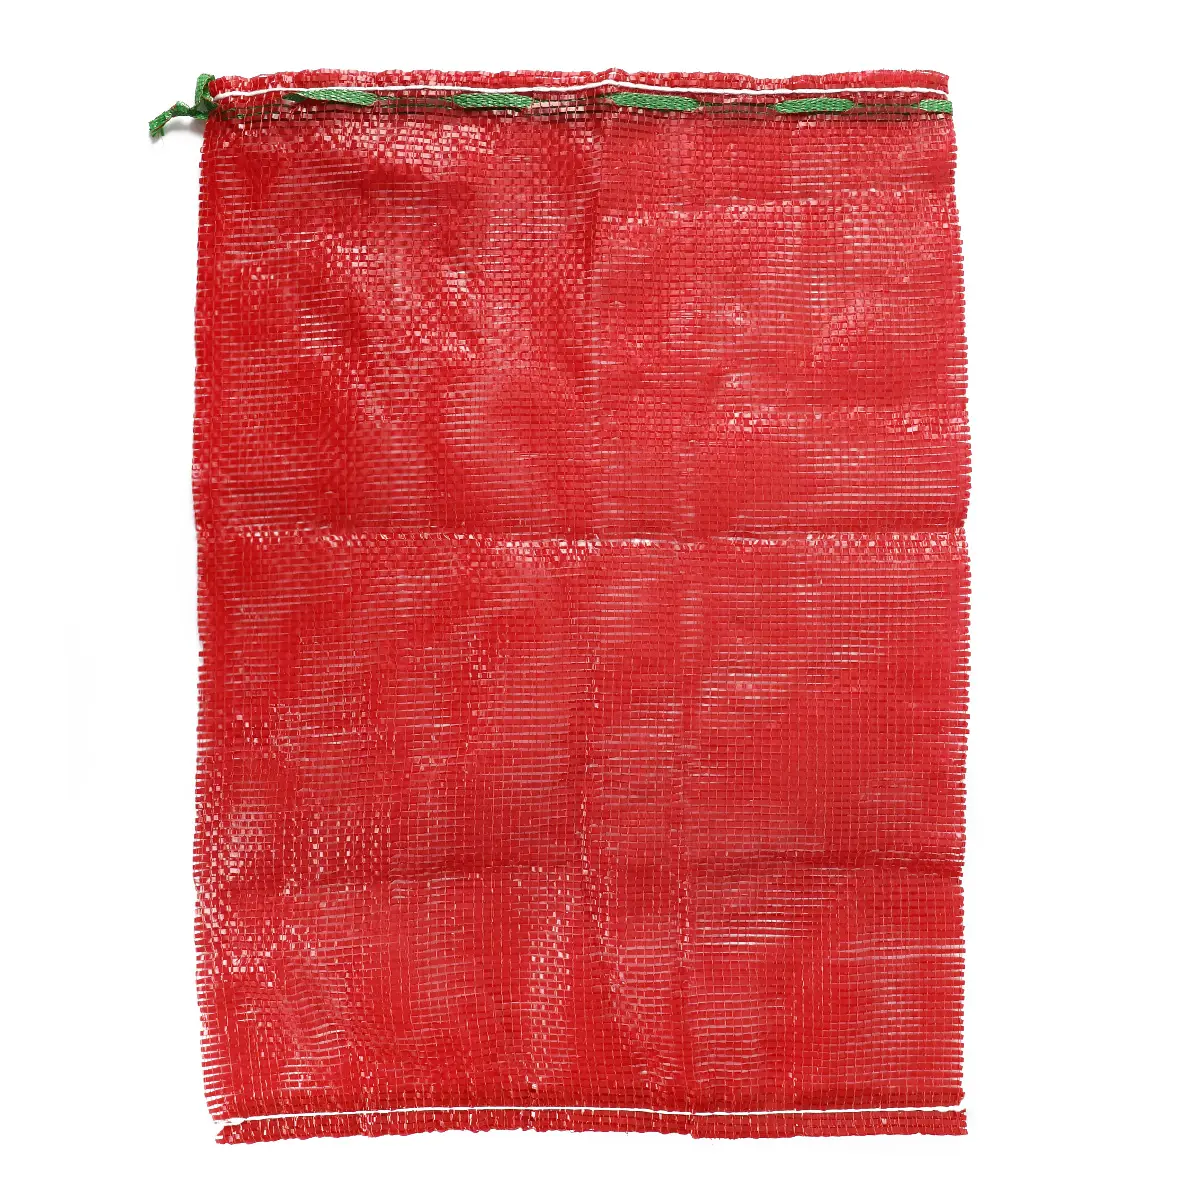 Tas jaring jaring jaring makanan laut untuk pengemasan dengan ukuran kustom tas jaring Tabung tali serut berwarna sesuai pesanan kemasan merah buah